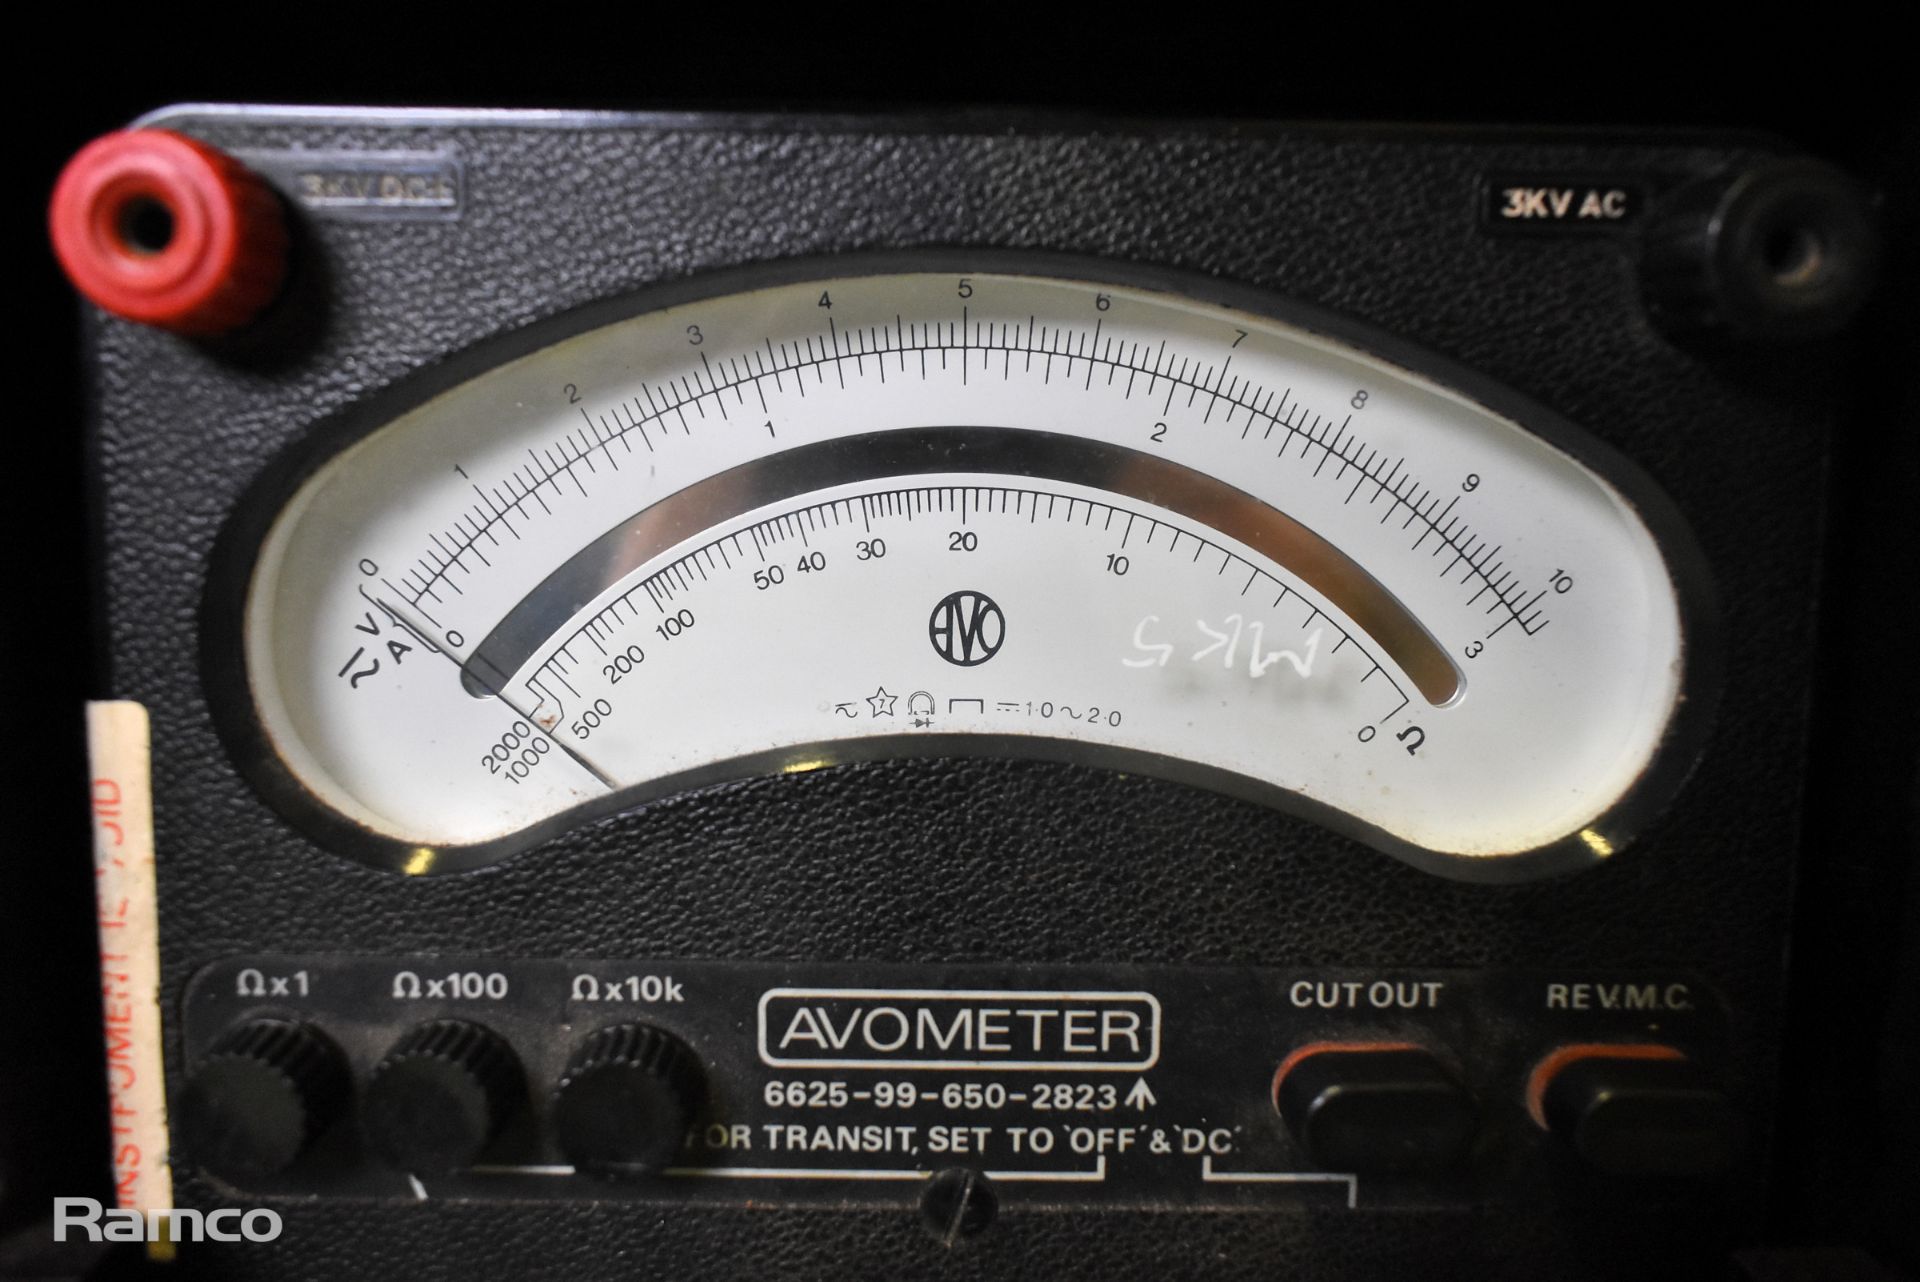 Avometer multimeter in carry case - Image 2 of 5